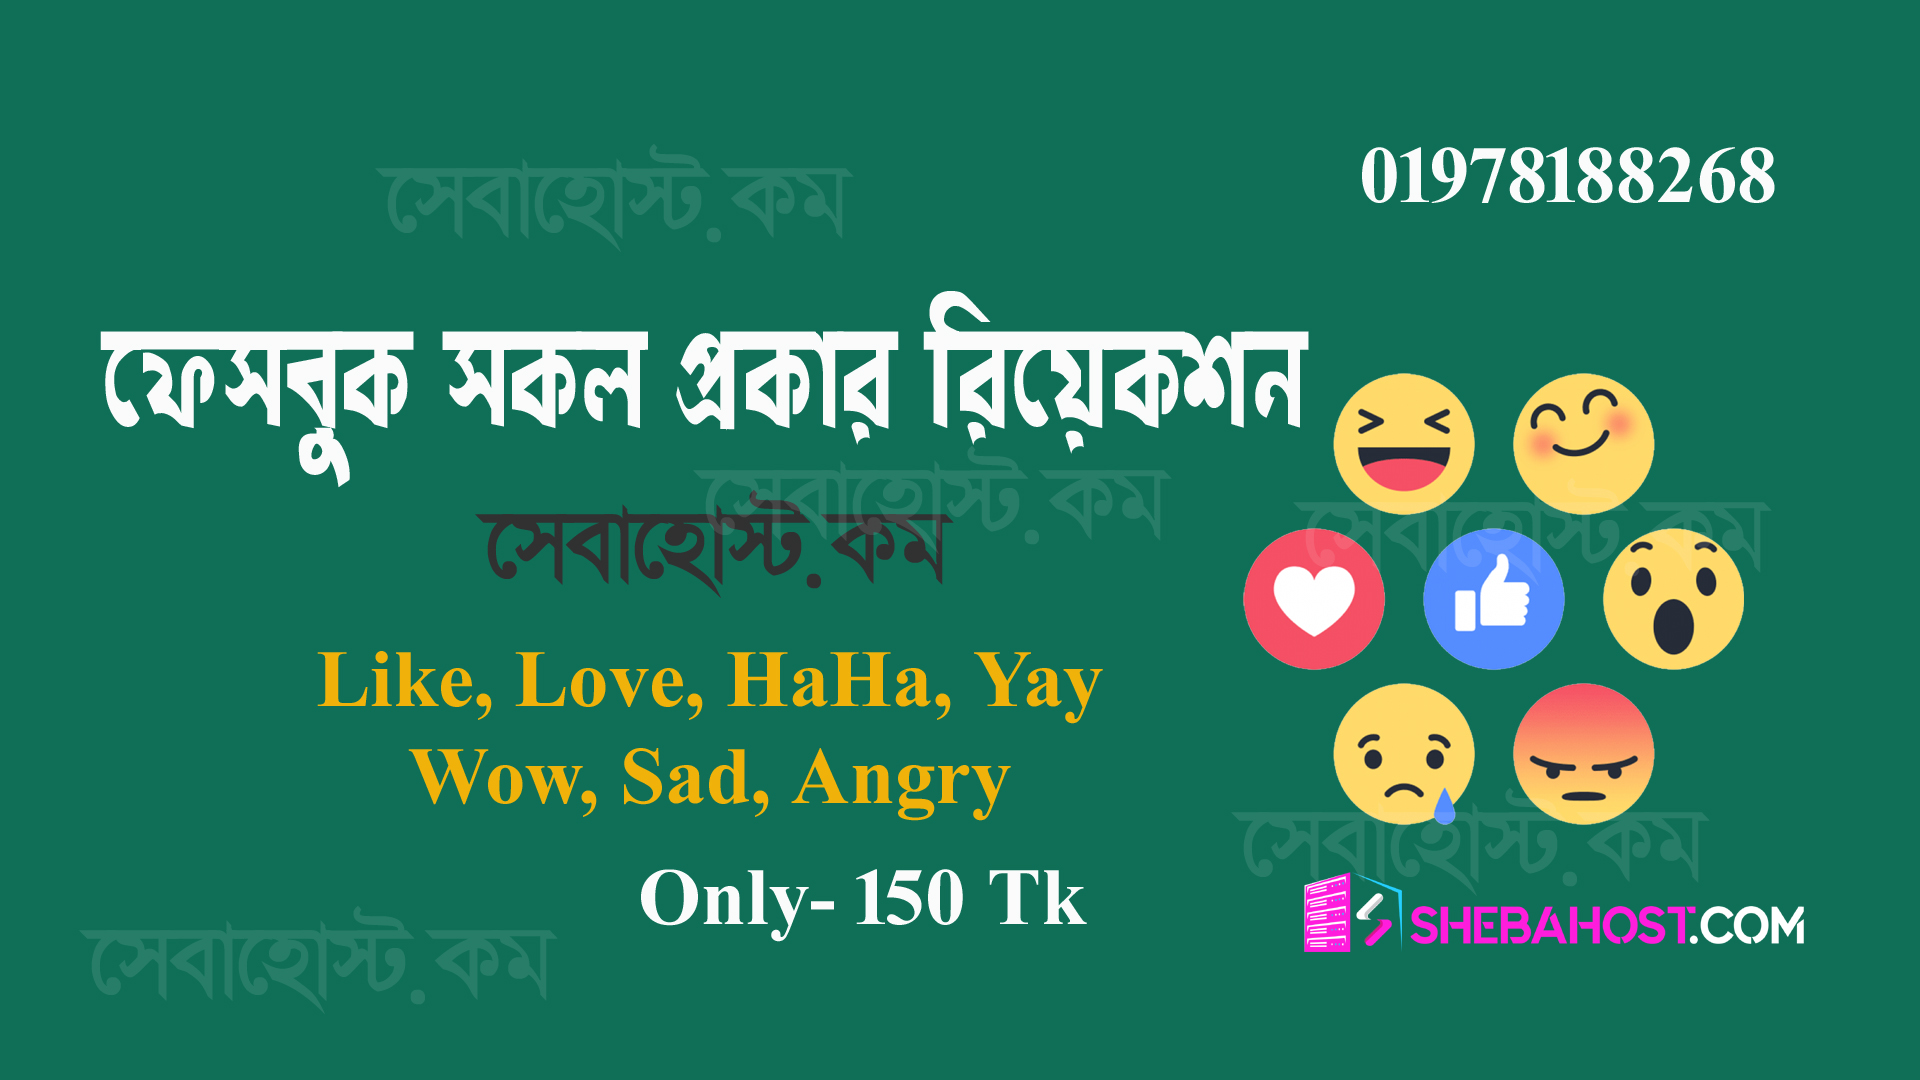 108244Website Traffic -1k from Bangladesh (Choose Referrer)